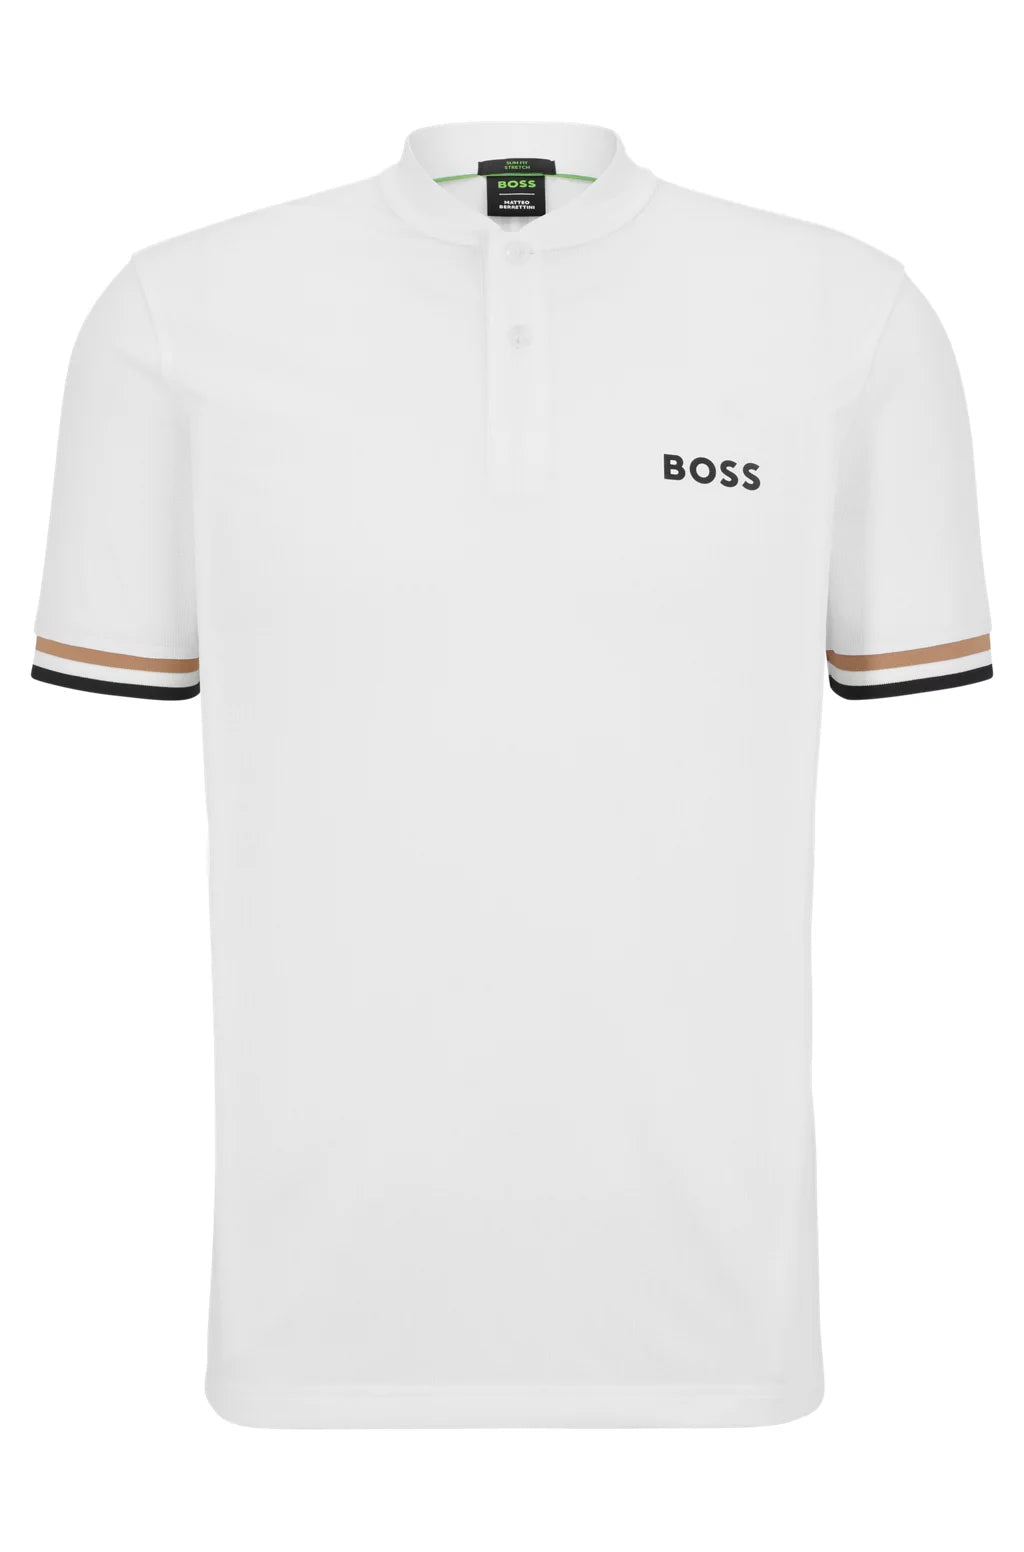 BOSS X Matteo Berrettini Short Sleeve Polo | White